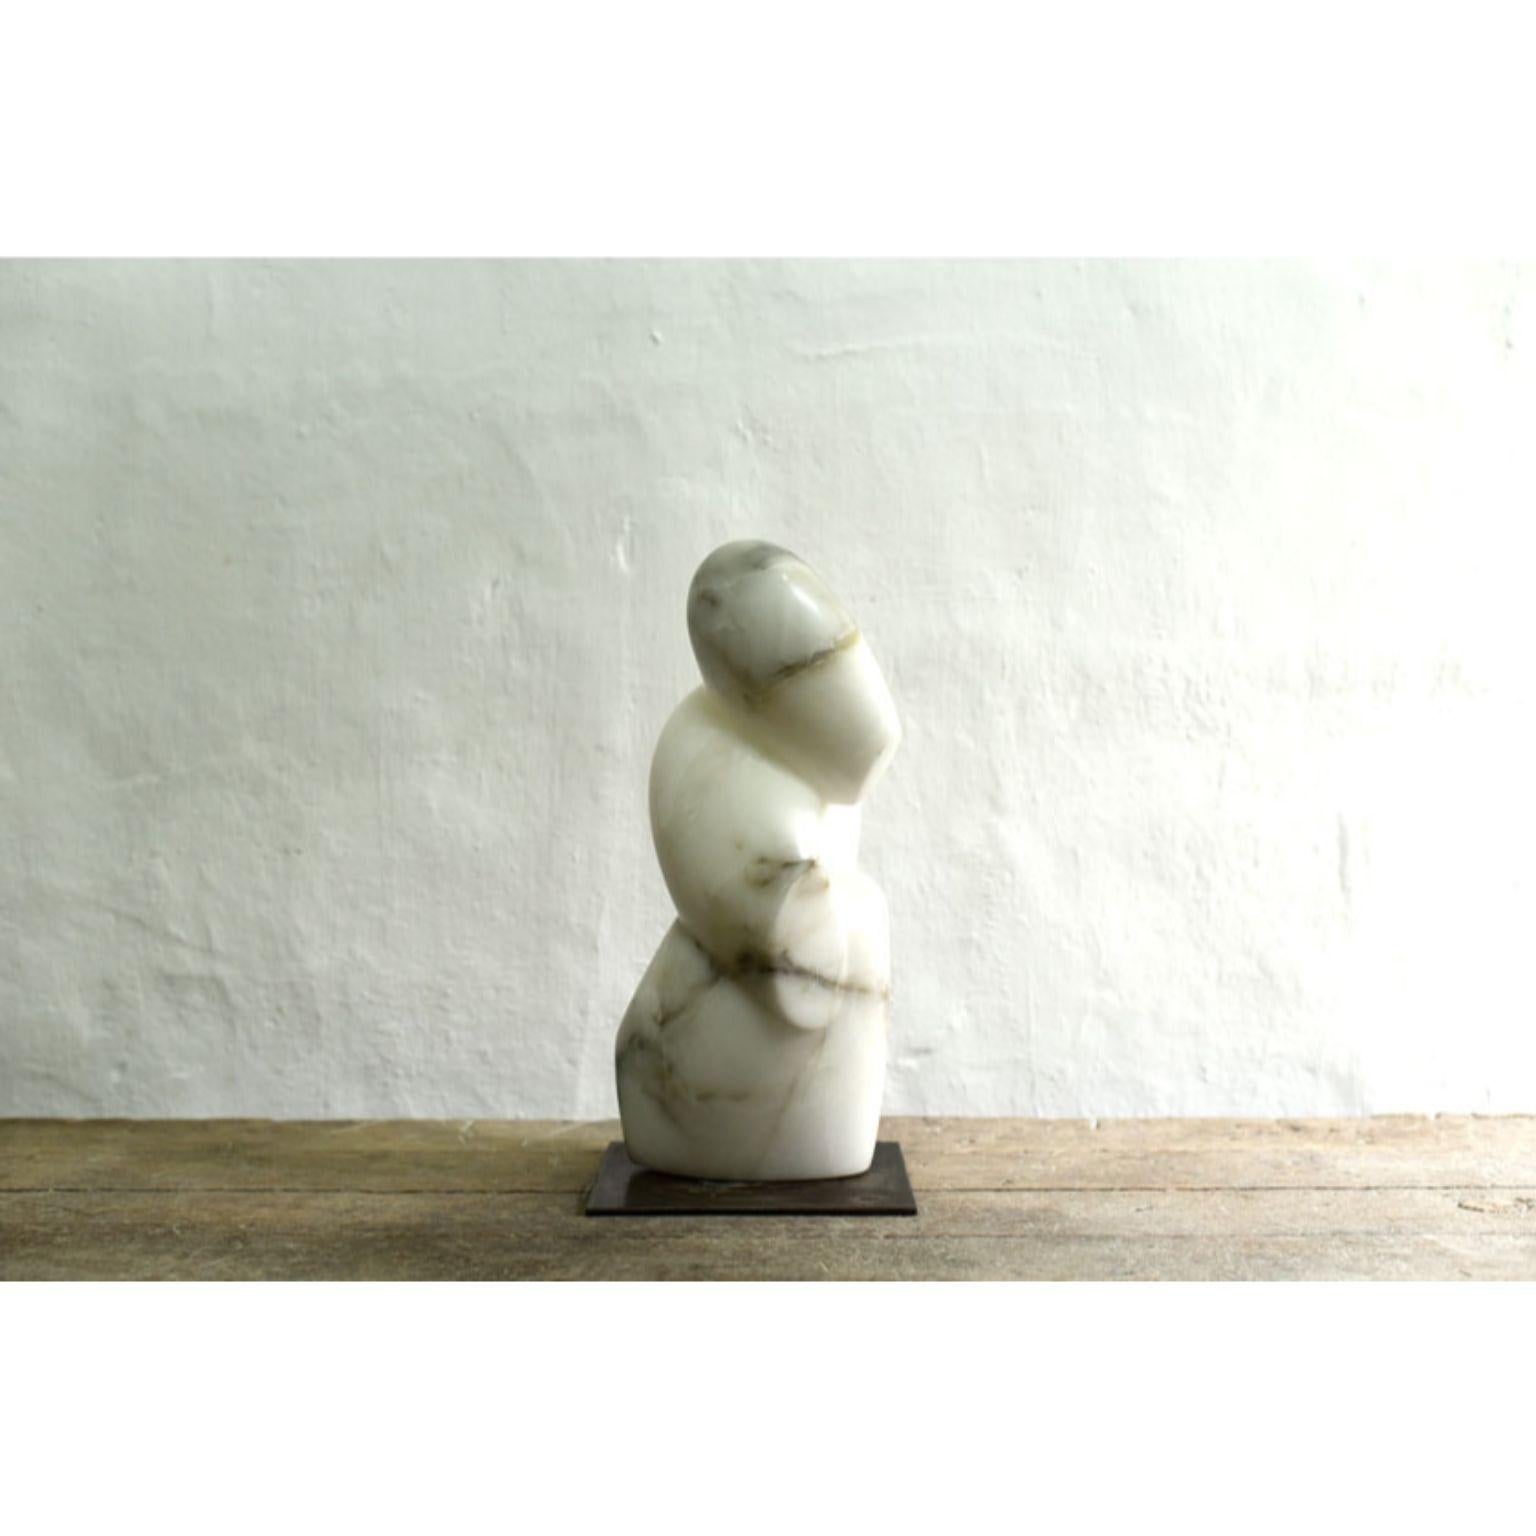 Yann Barrere - Intro - Original Sculpture
Dimensions: 41 x 23 x 16 cm
Materials: Alabaster

